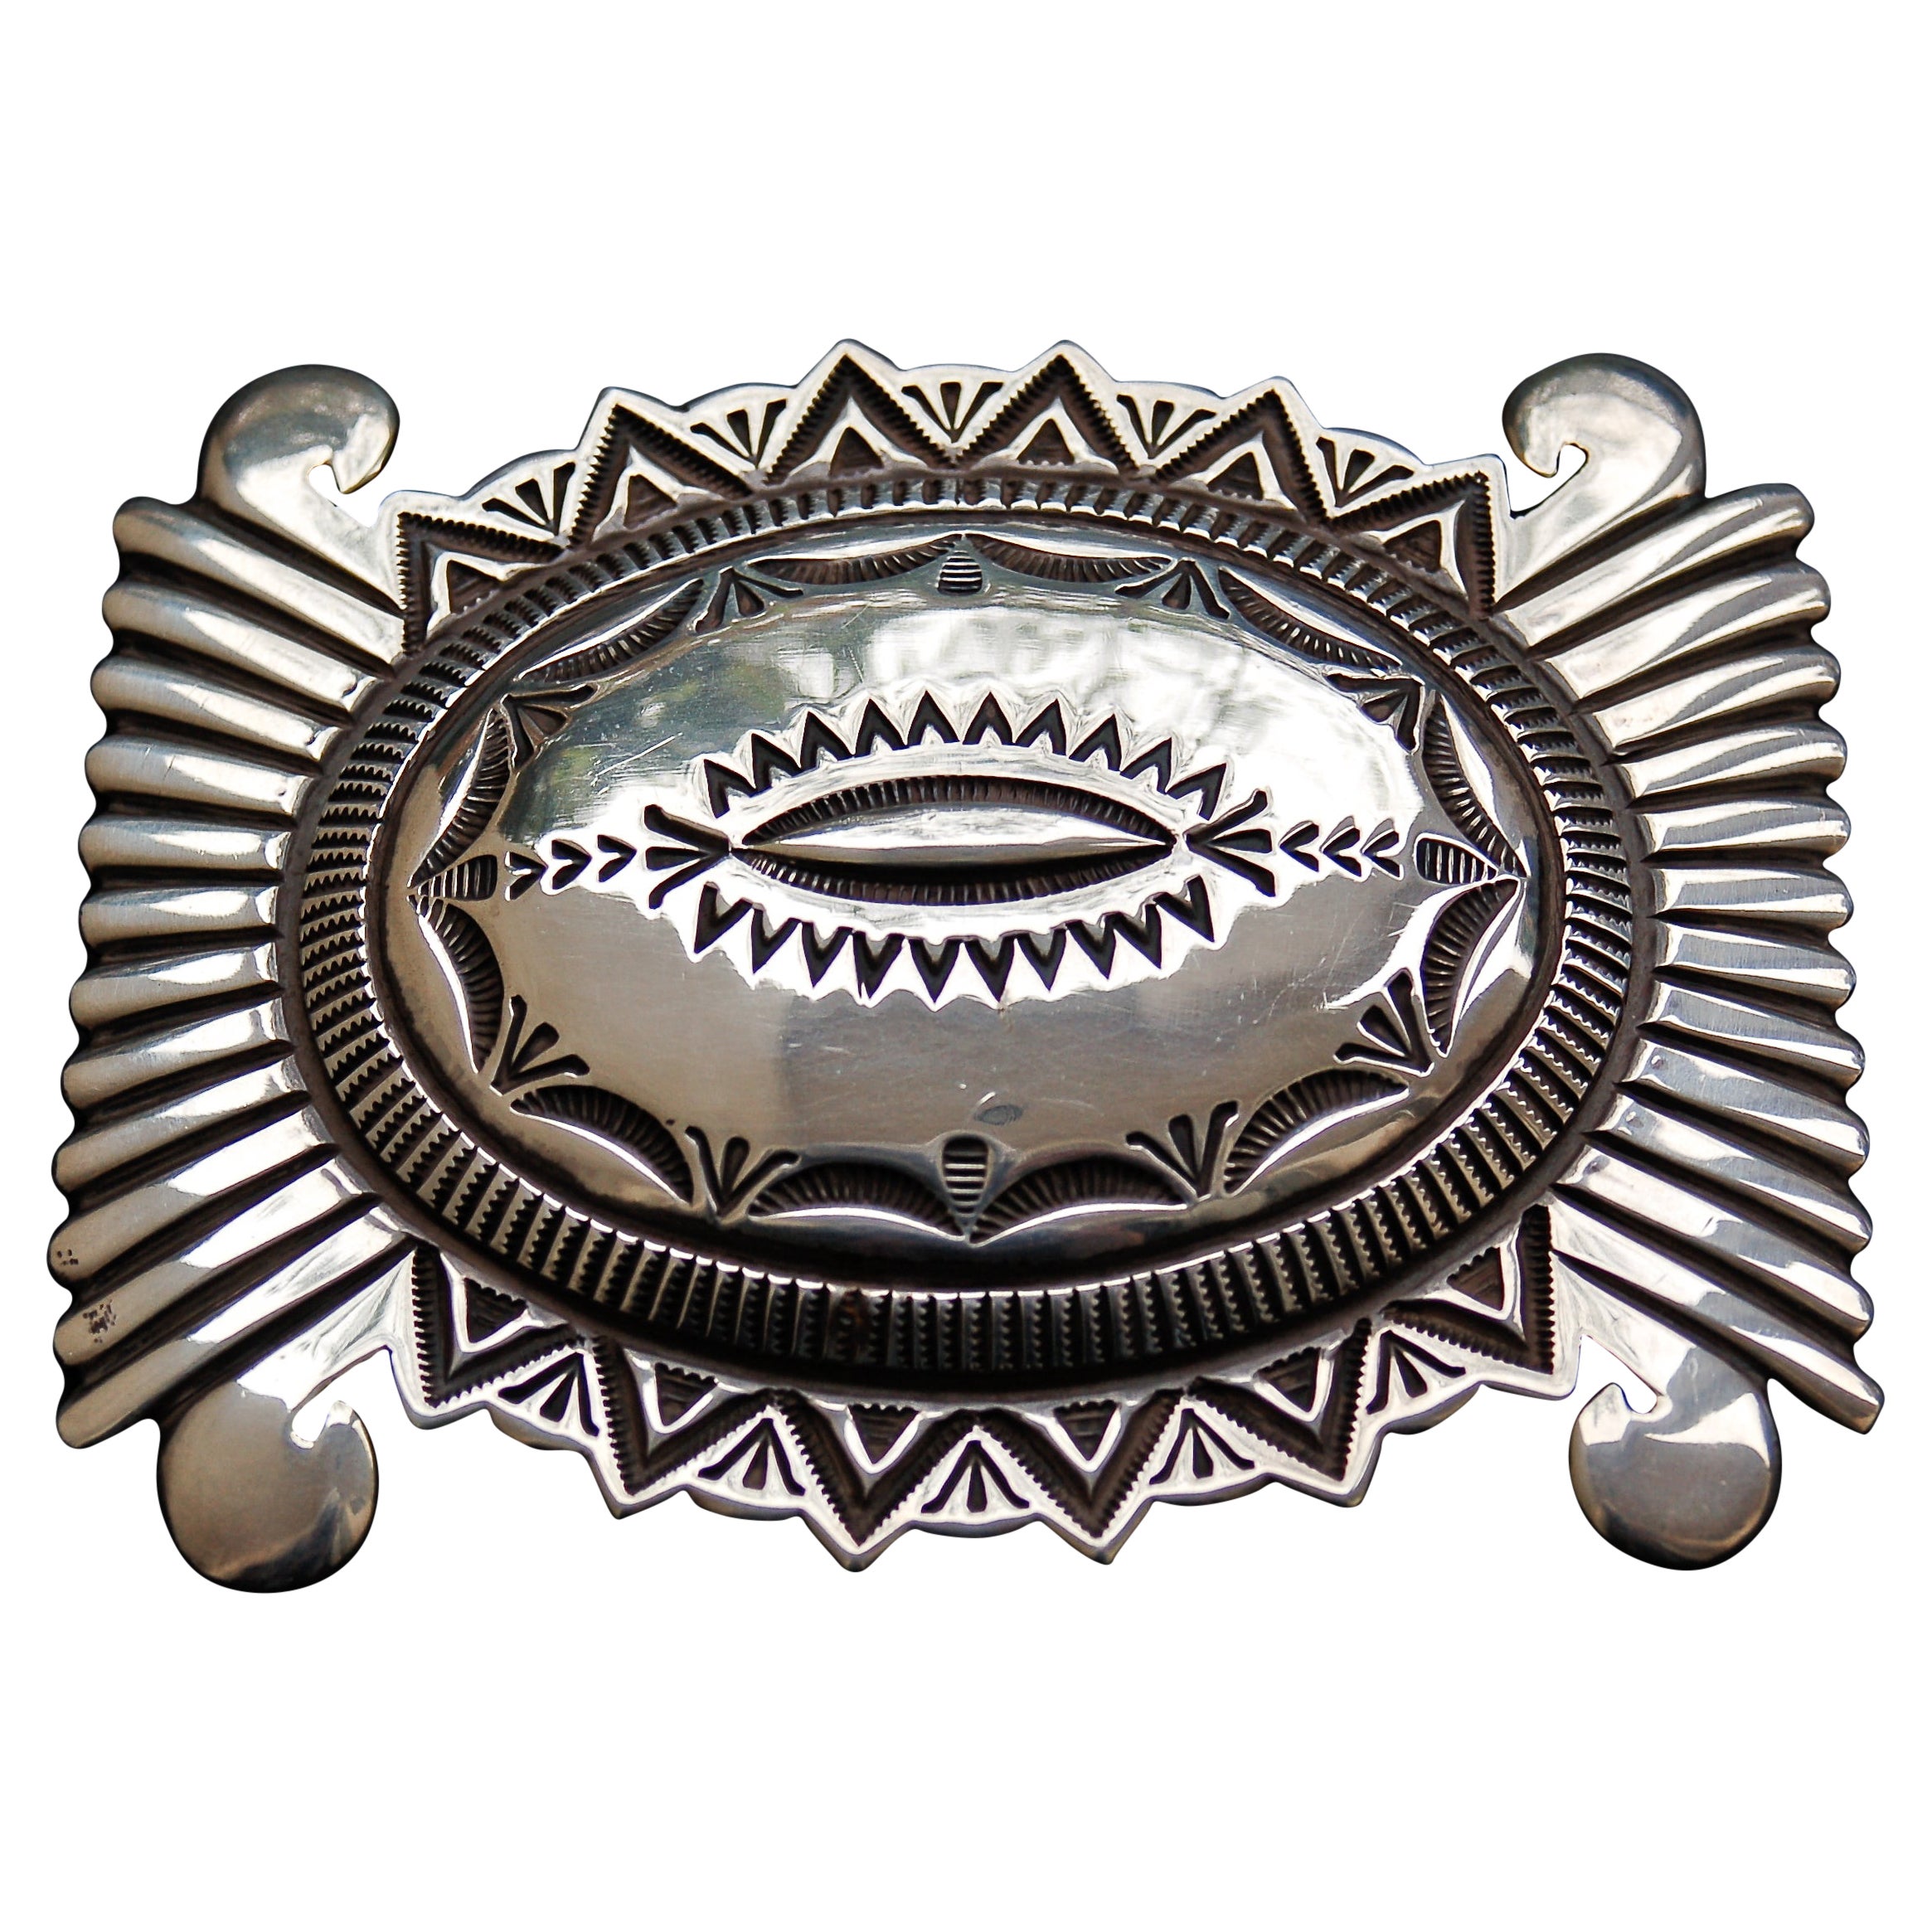 Striking Navajo Stamped Heavy Sterling Silver Belt Buckle by Wilson Jim, 1988 For Sale